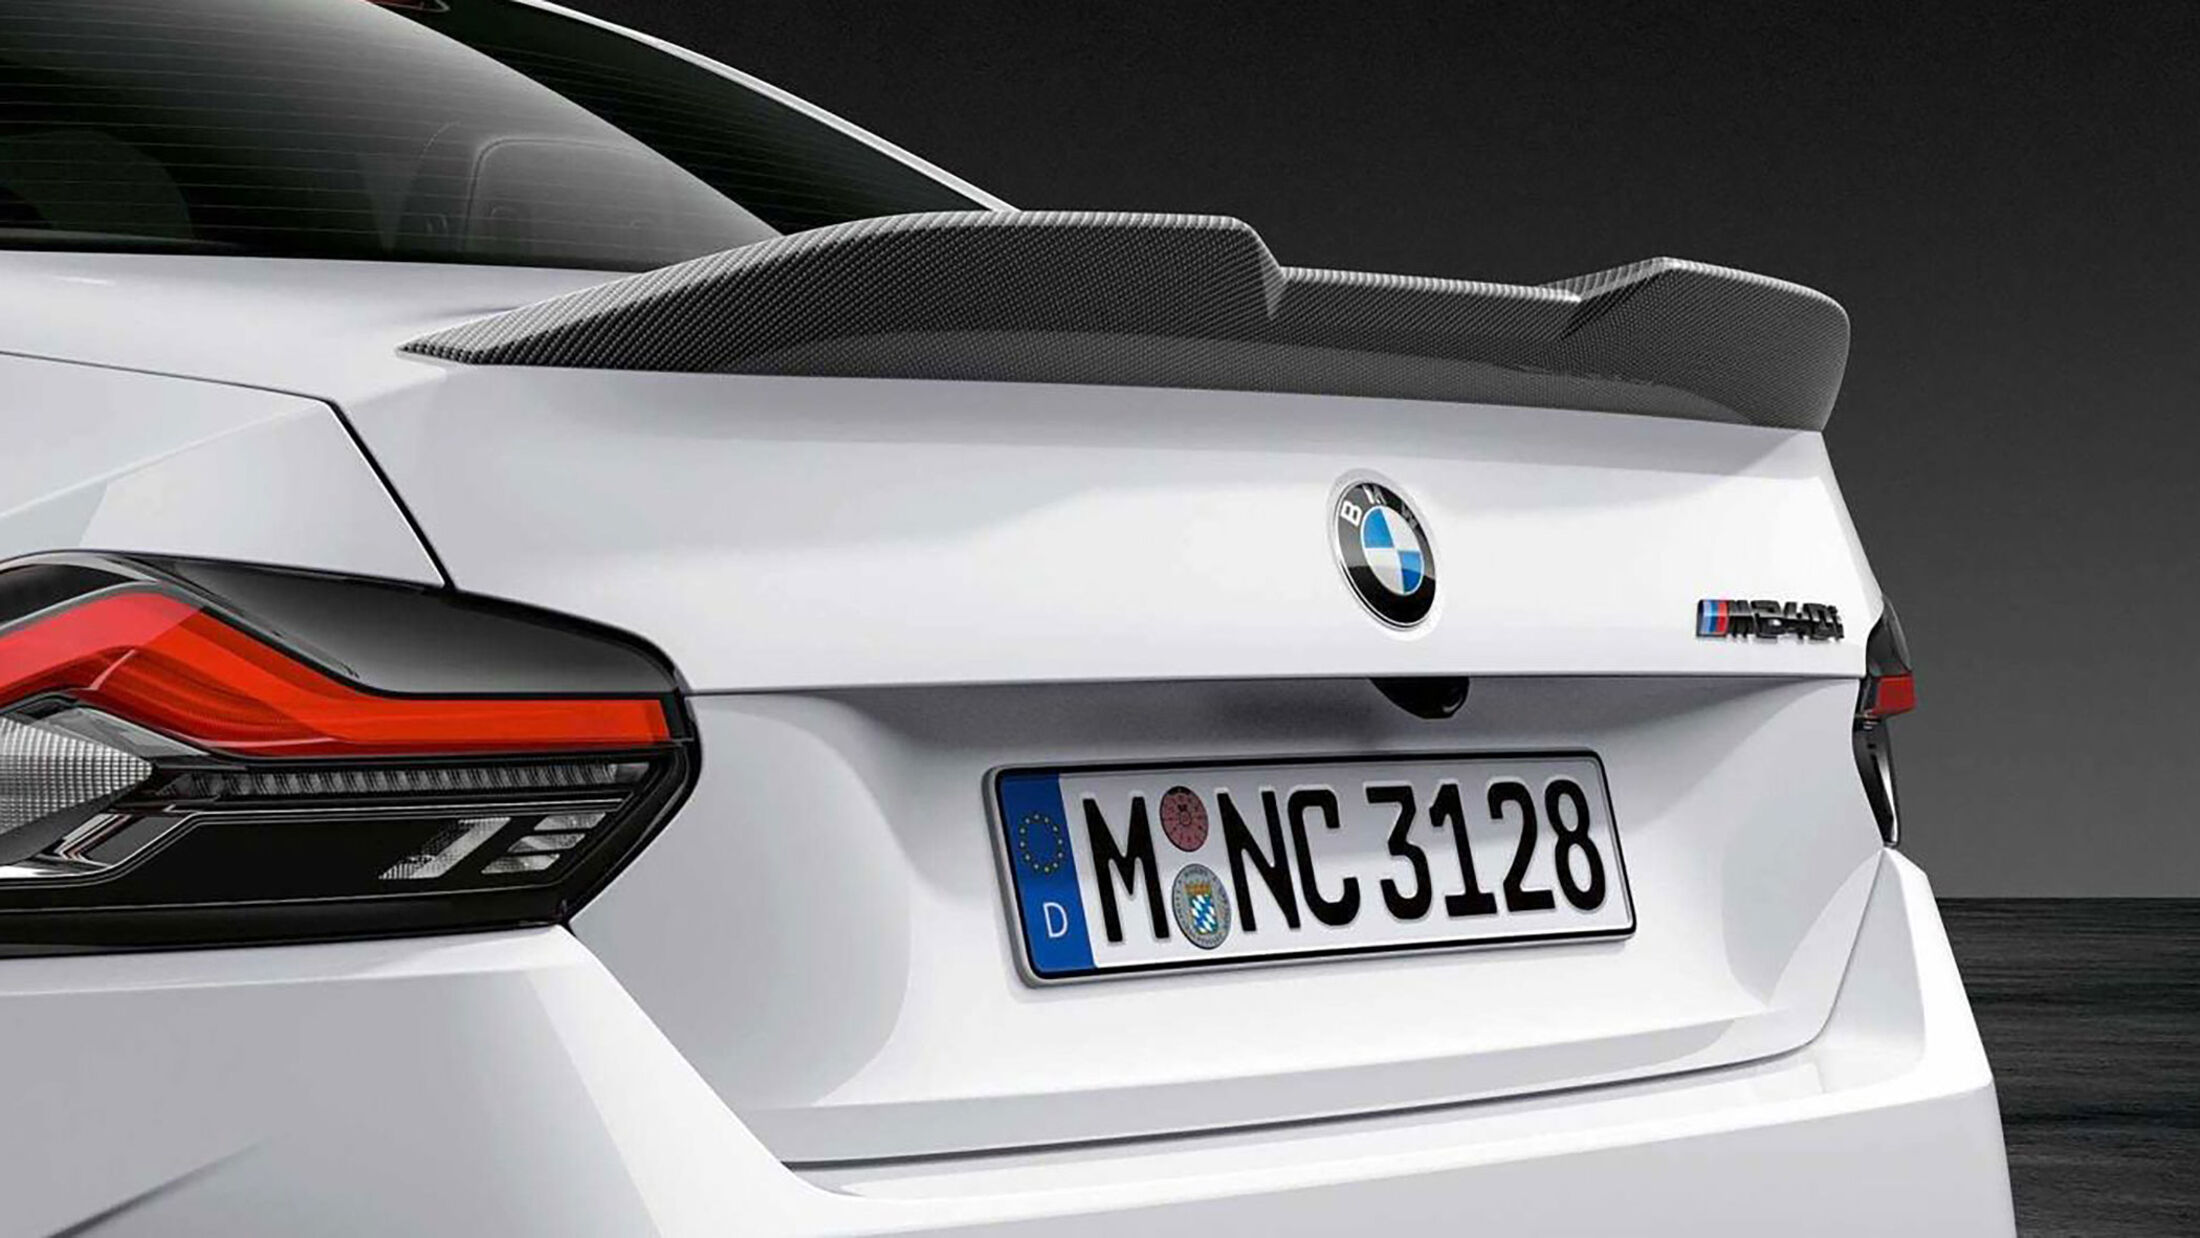 BMW 2er Coupé: Sportlicher mit M Performance Parts